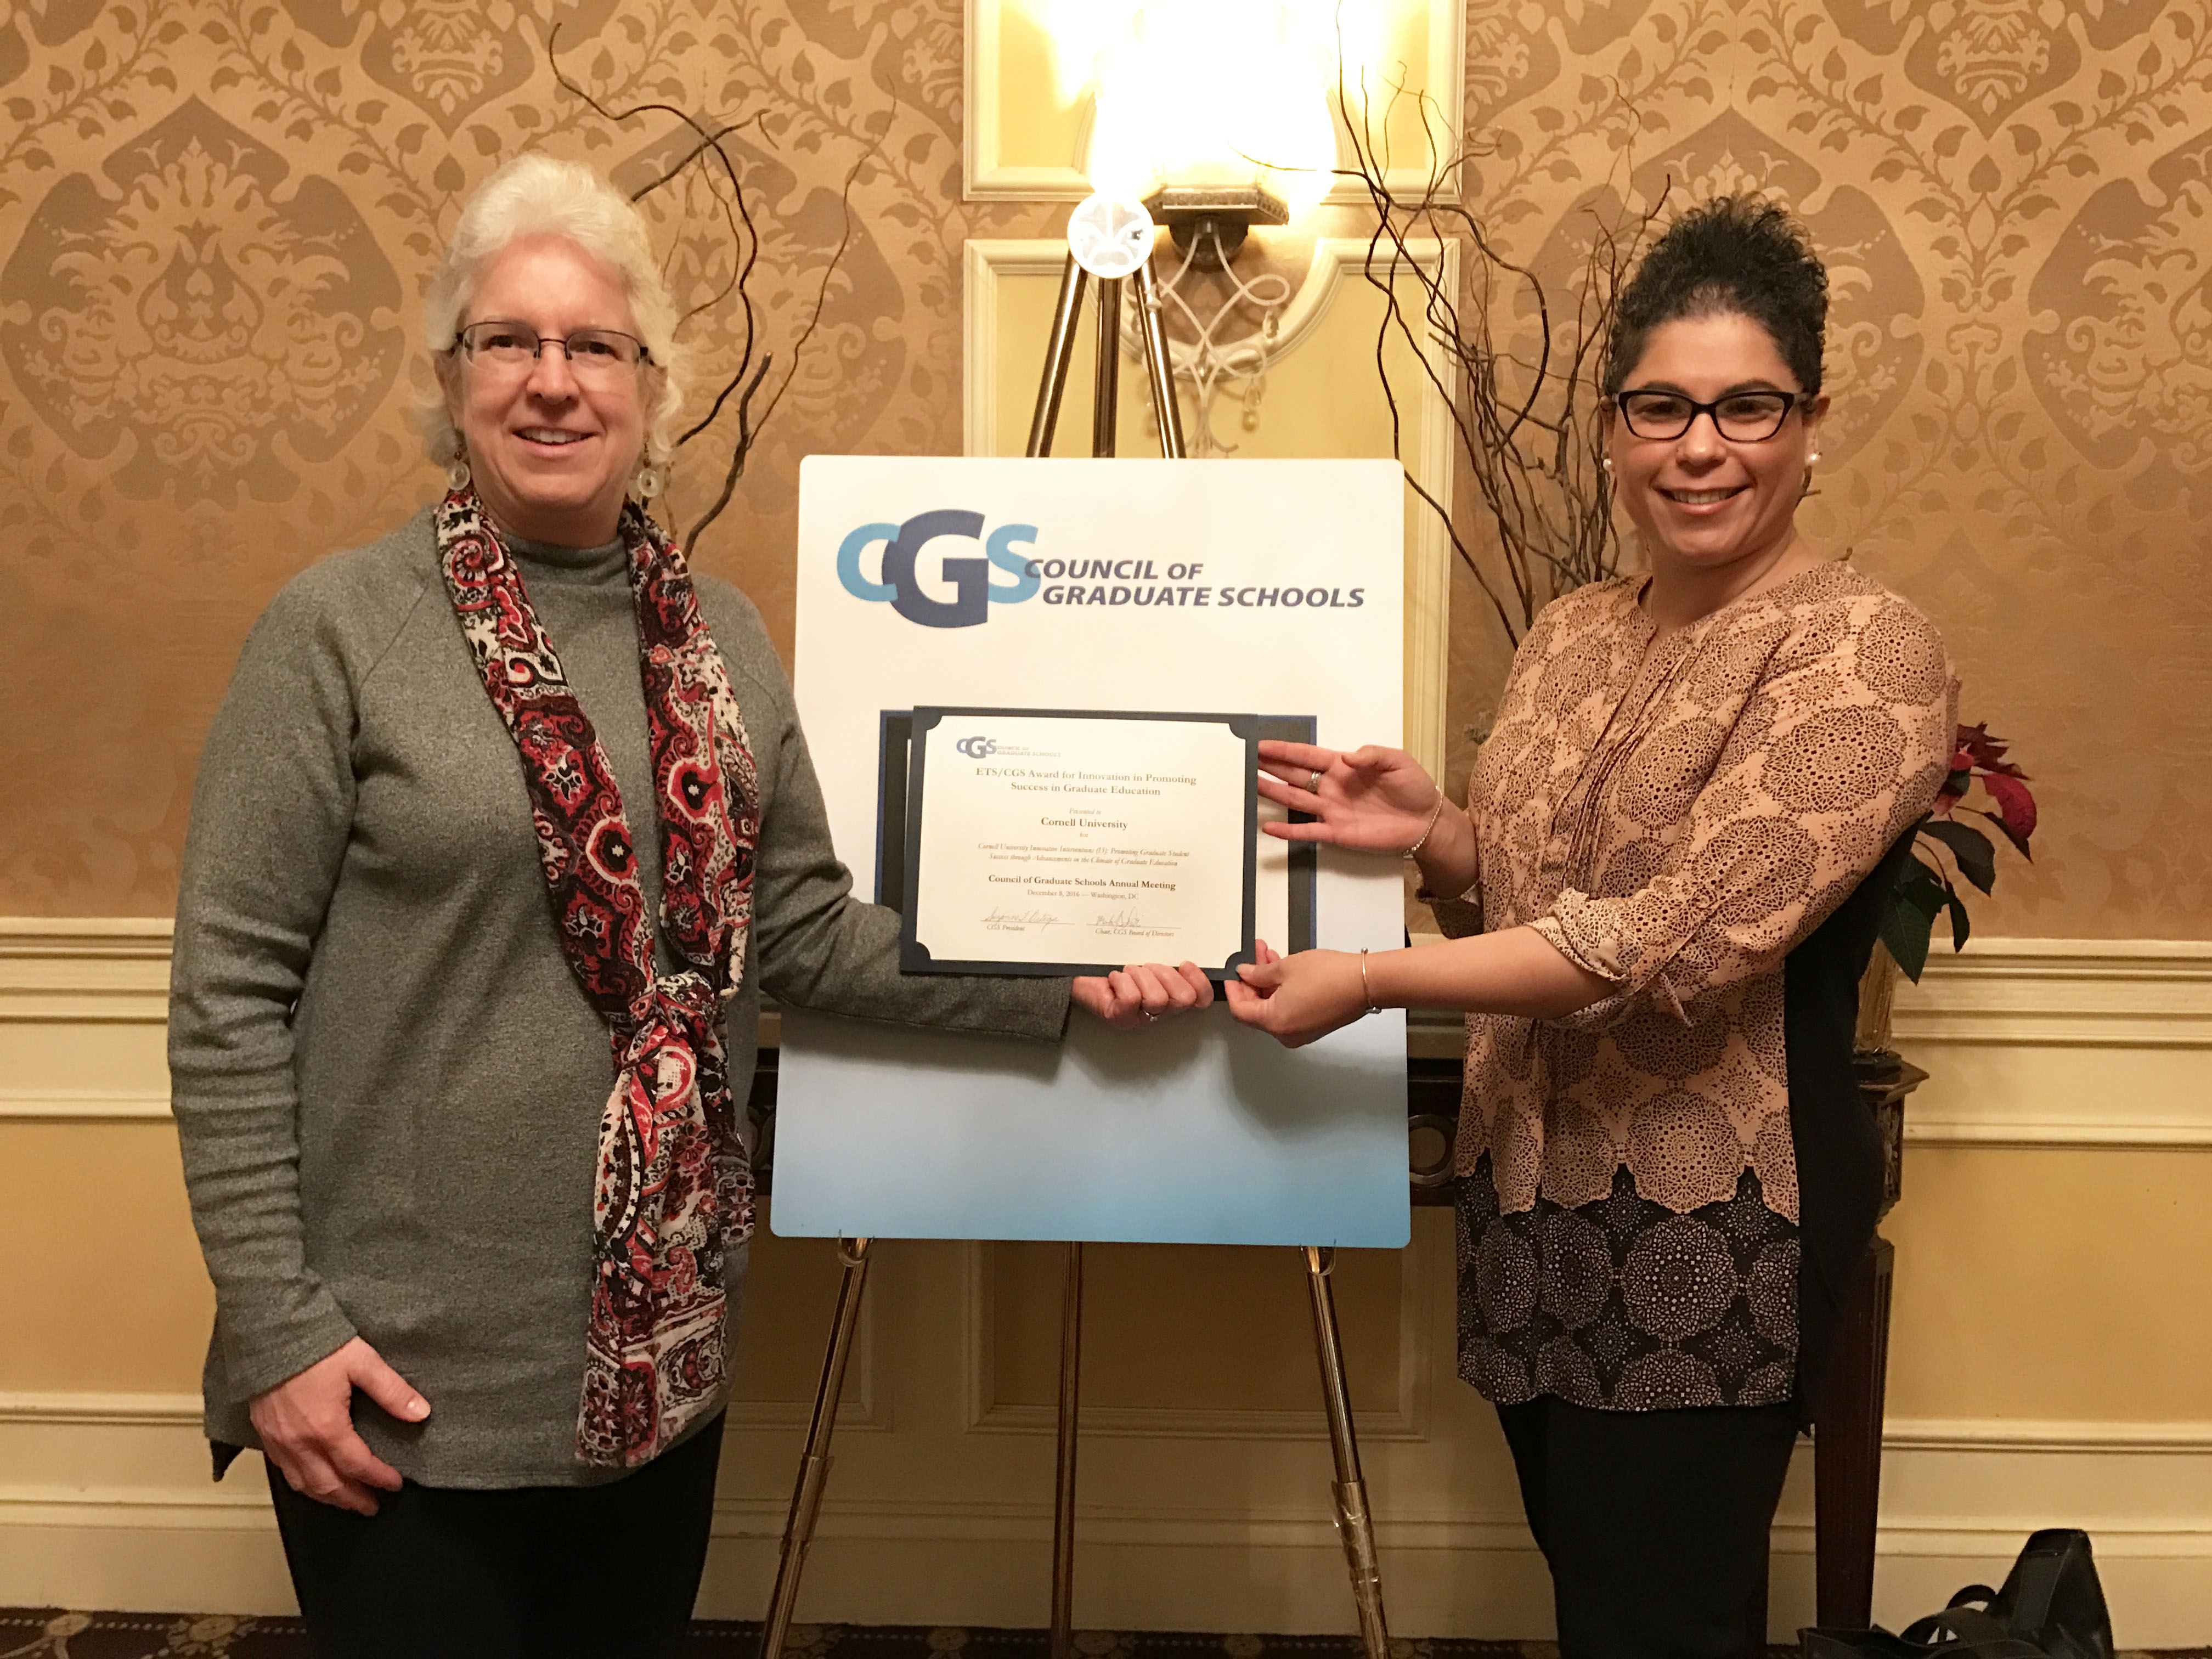 Barbara Knuth accepts CGS award